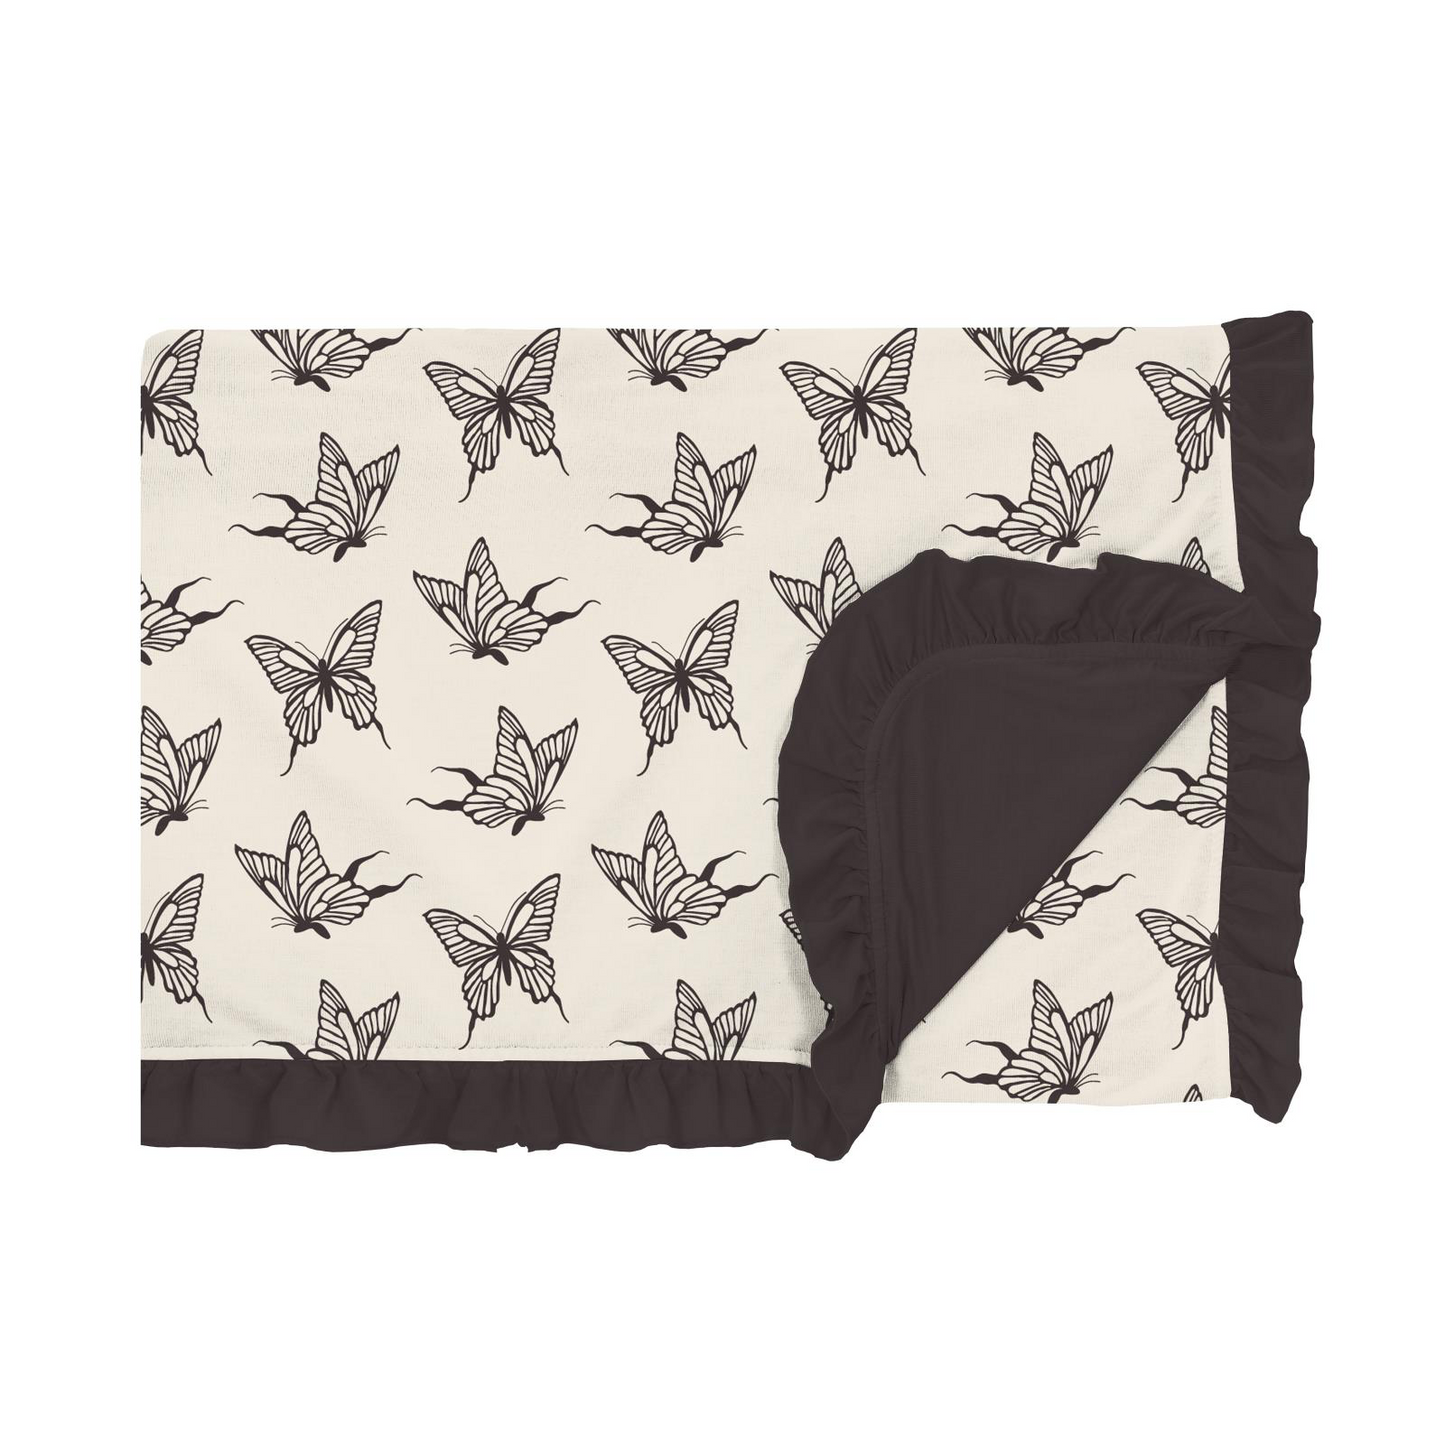 Print Ruffle Toddler Blanket in Natural Swallowtail